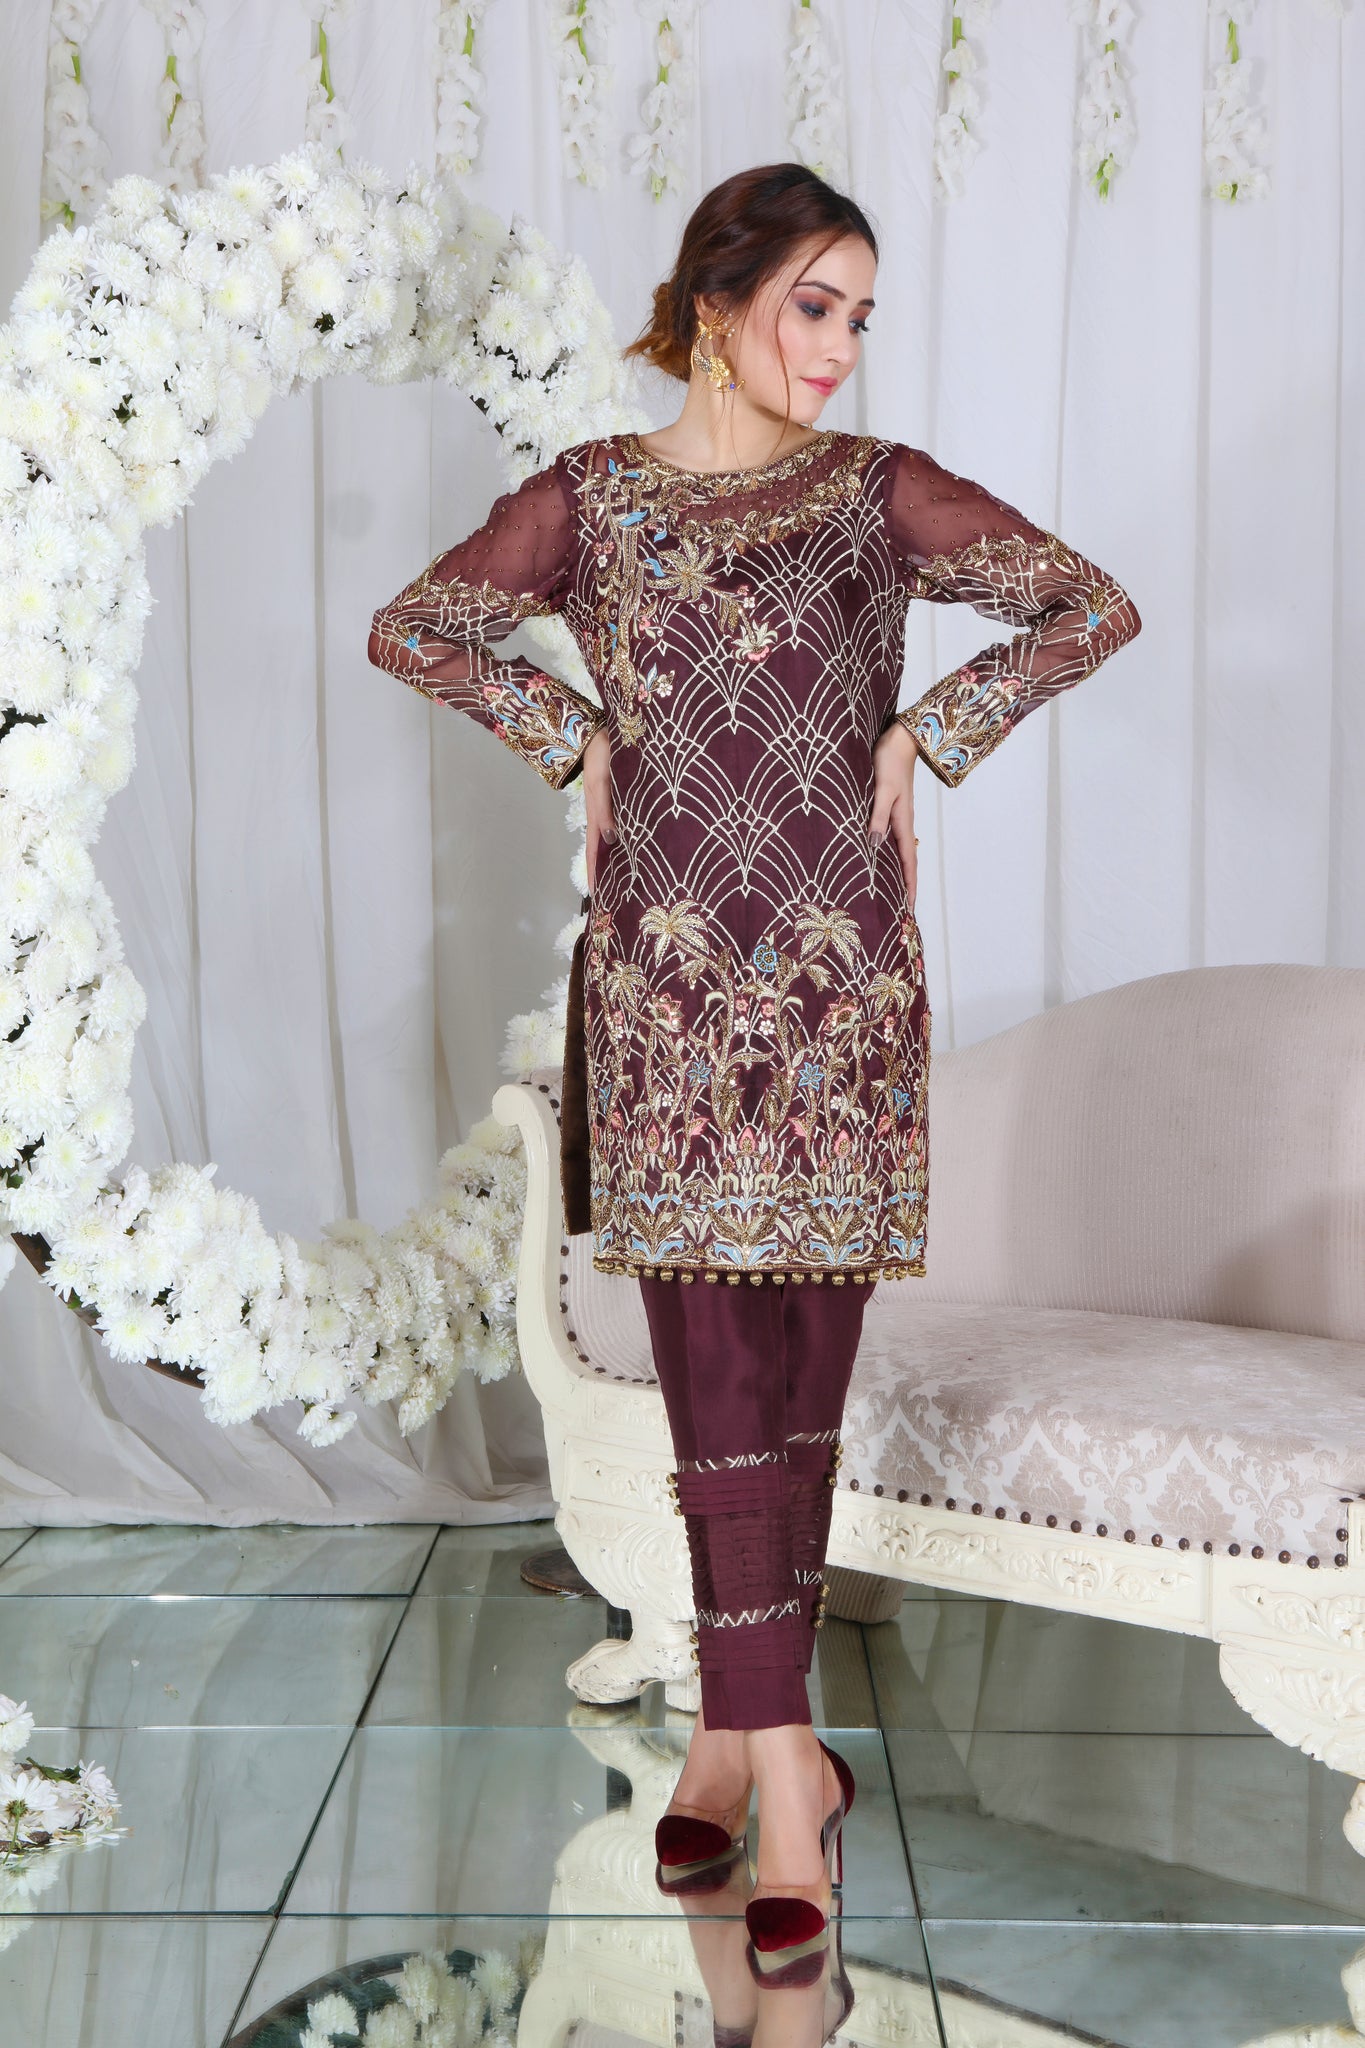 Russet | Pakistani Designer Outfit | Sarosh Salman